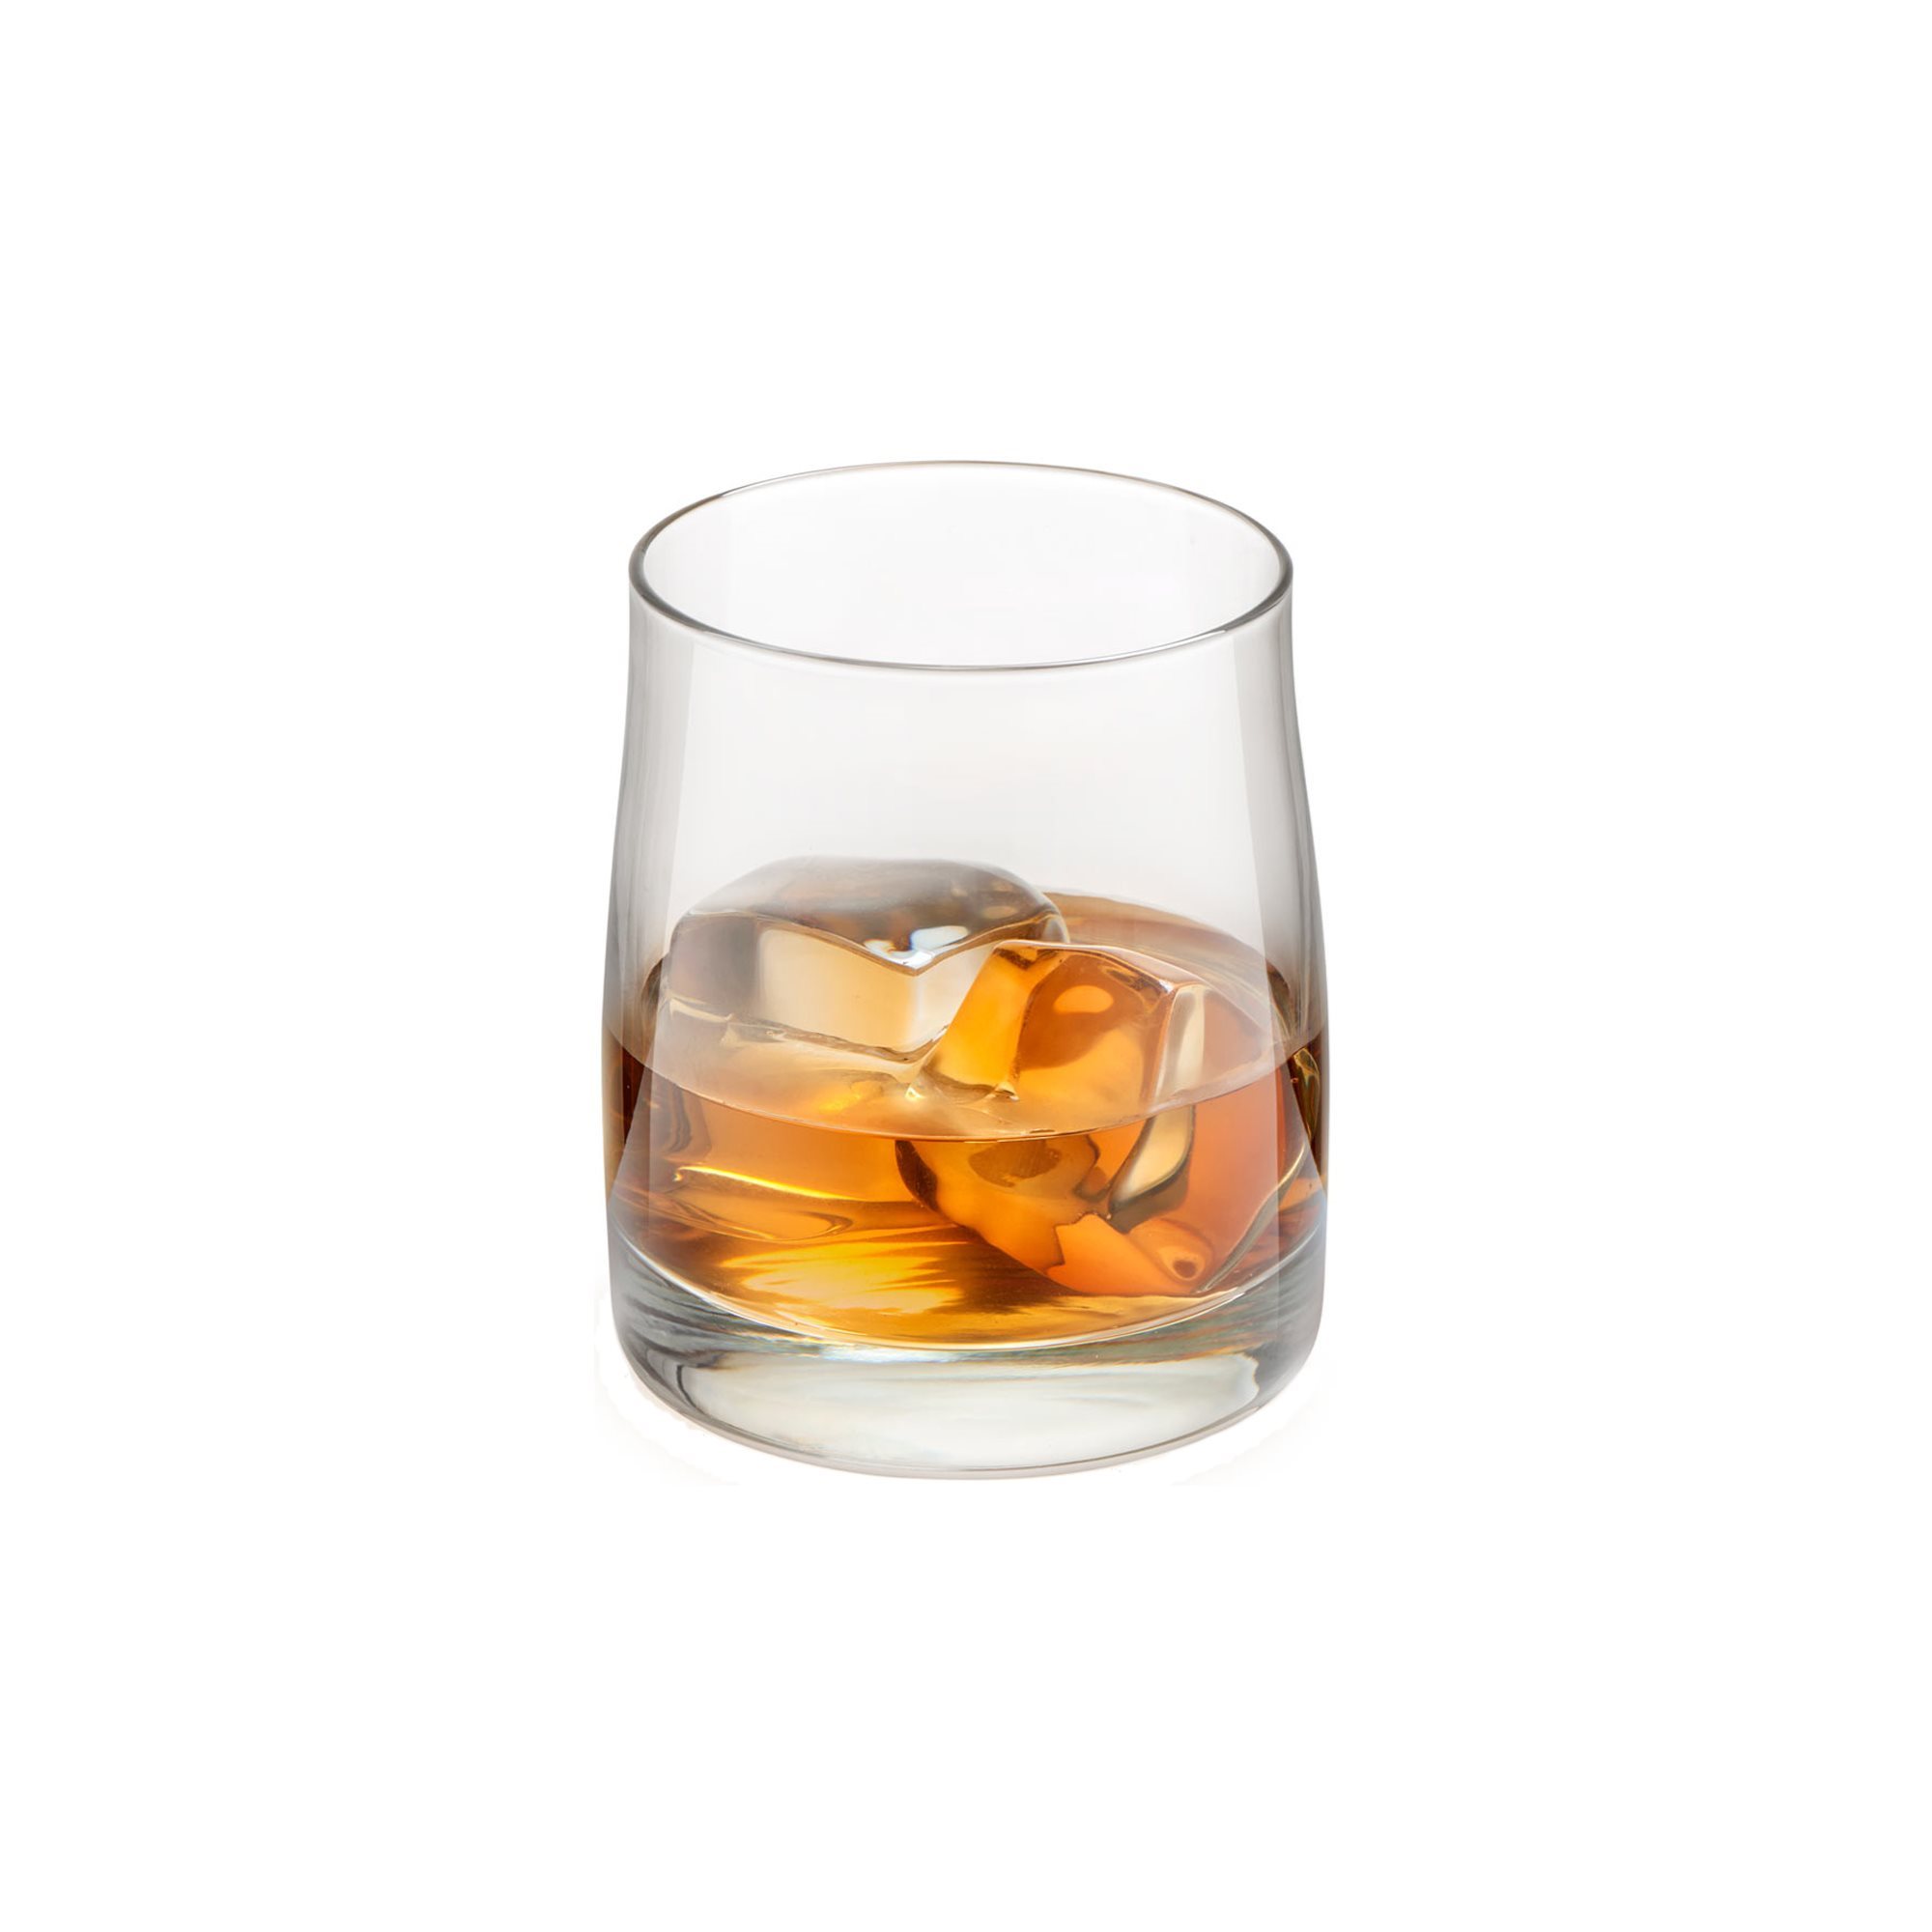 Set of 4 Artisan whiskey glasses, 280 ml - Royal Leerdam